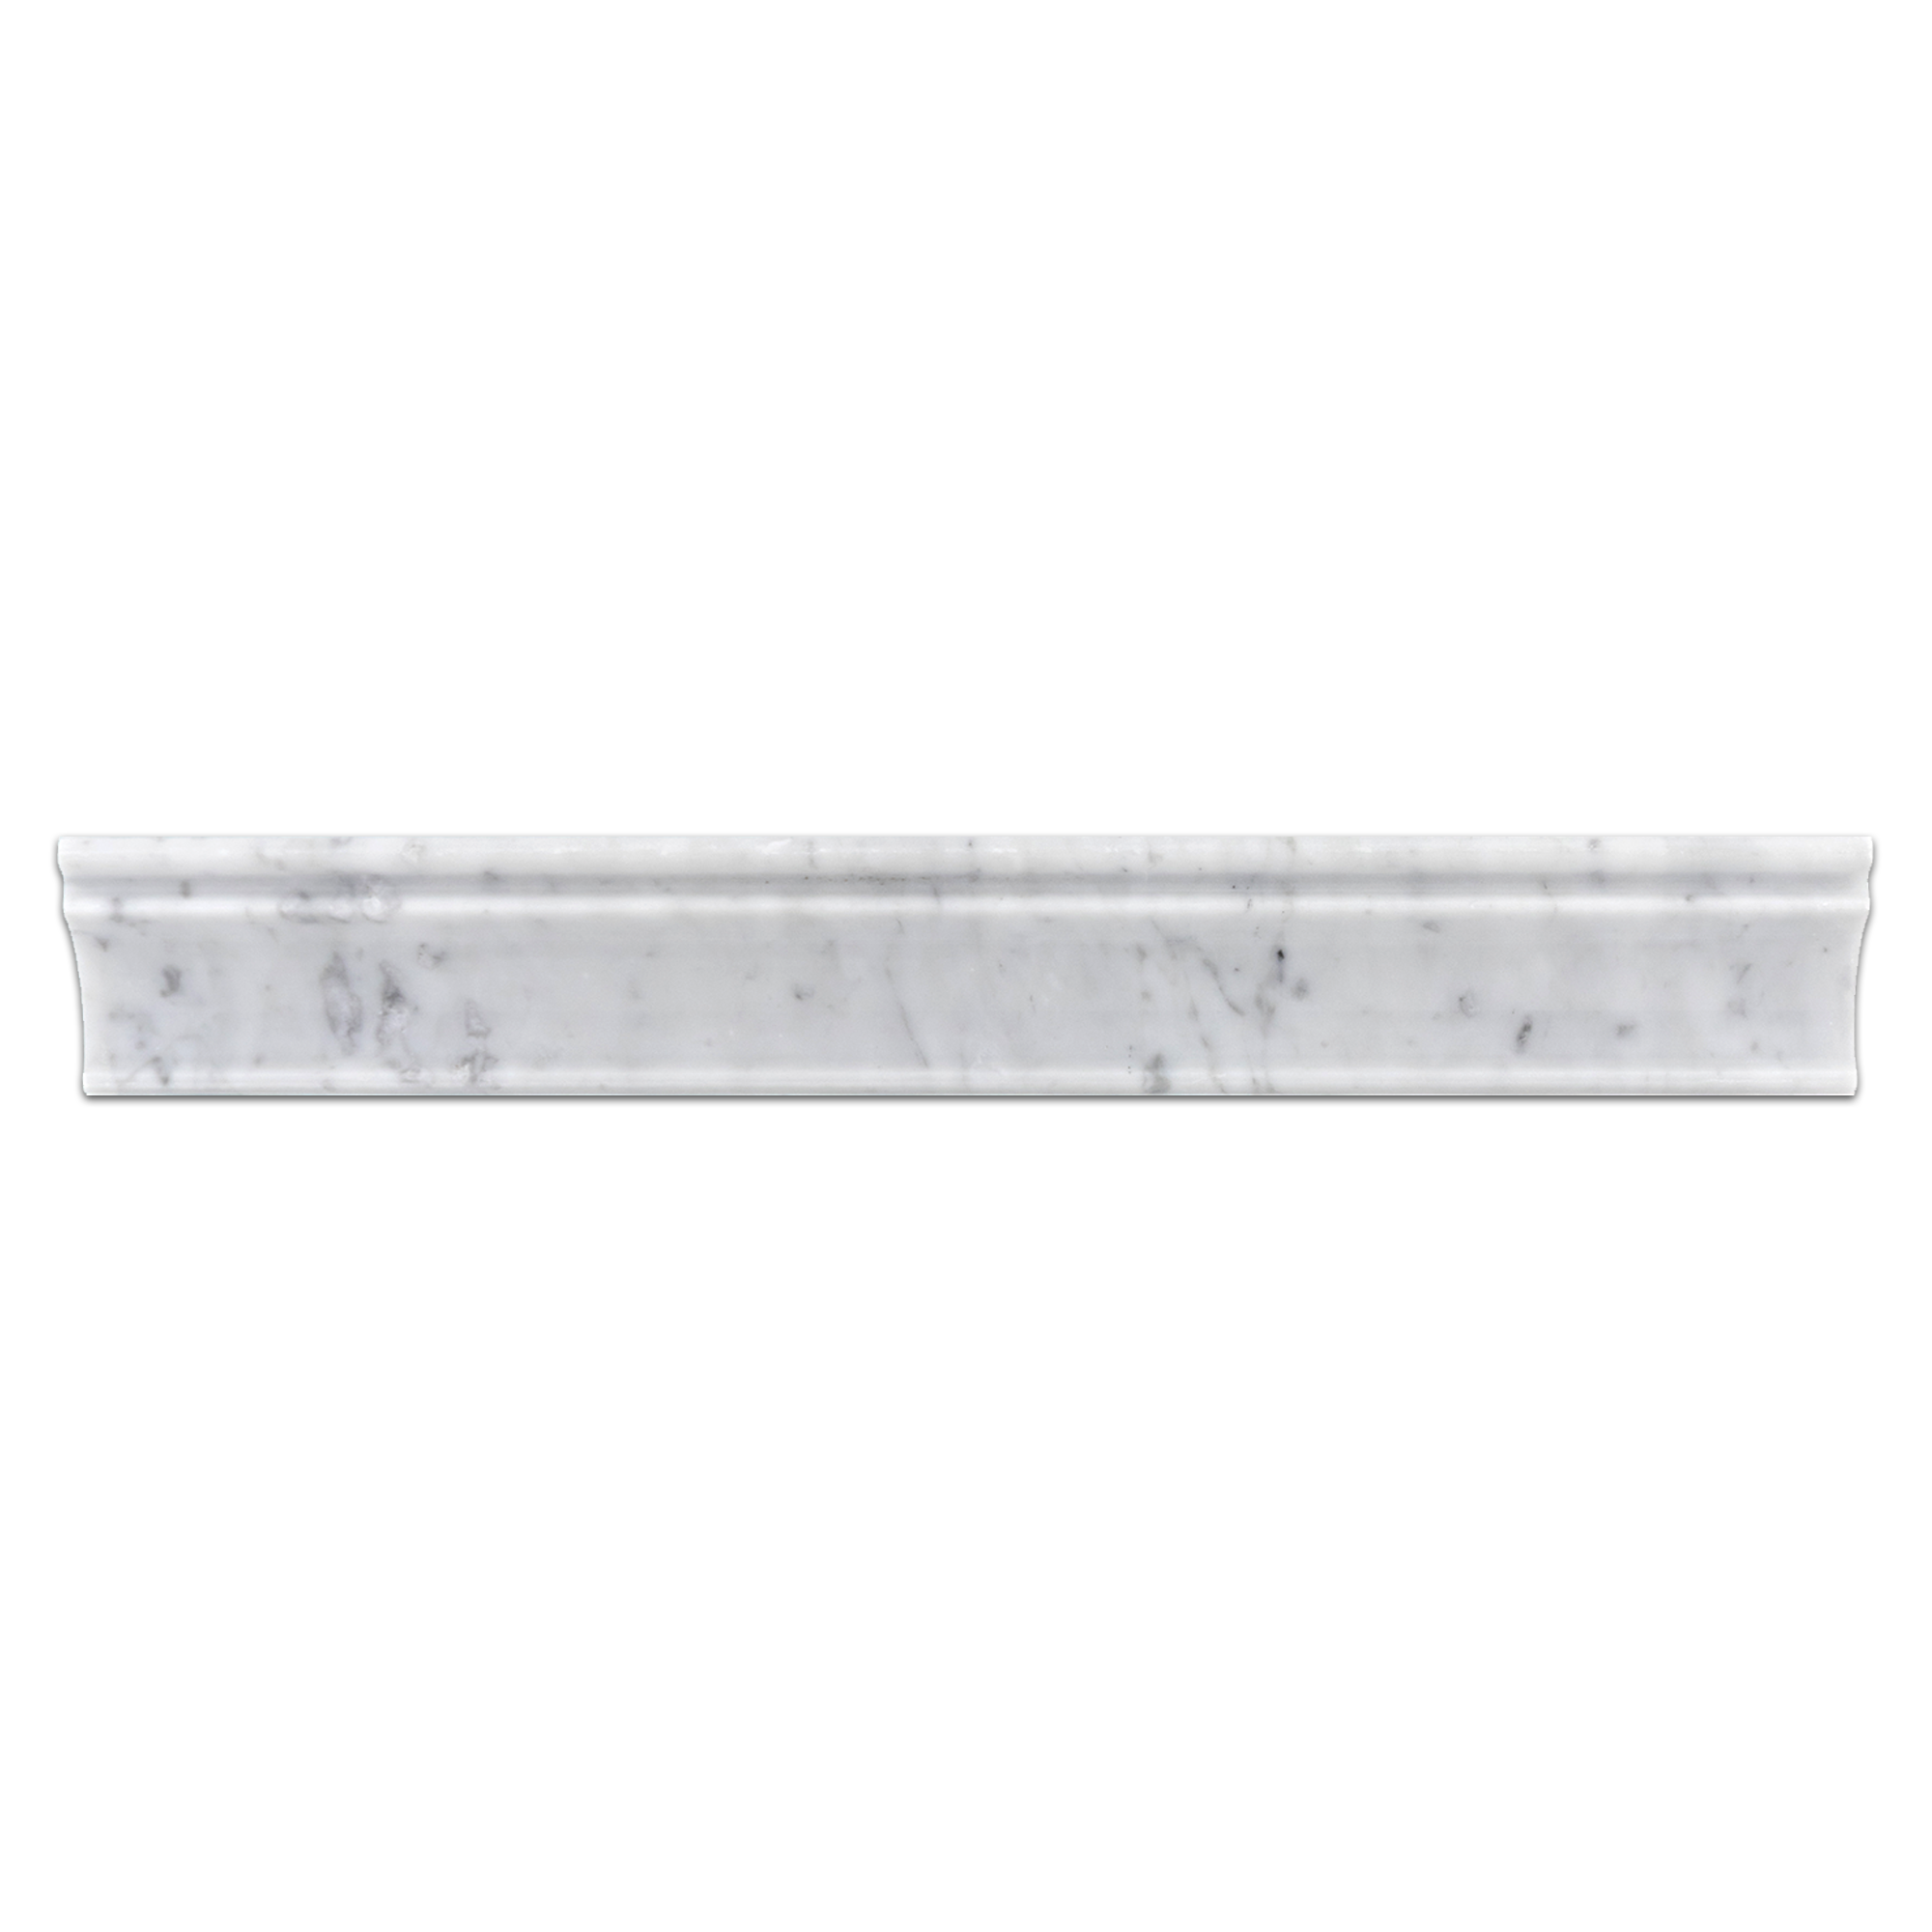 Elon Bianco Carrara marble crown molding 2x12 polished tile by Surface Group International.